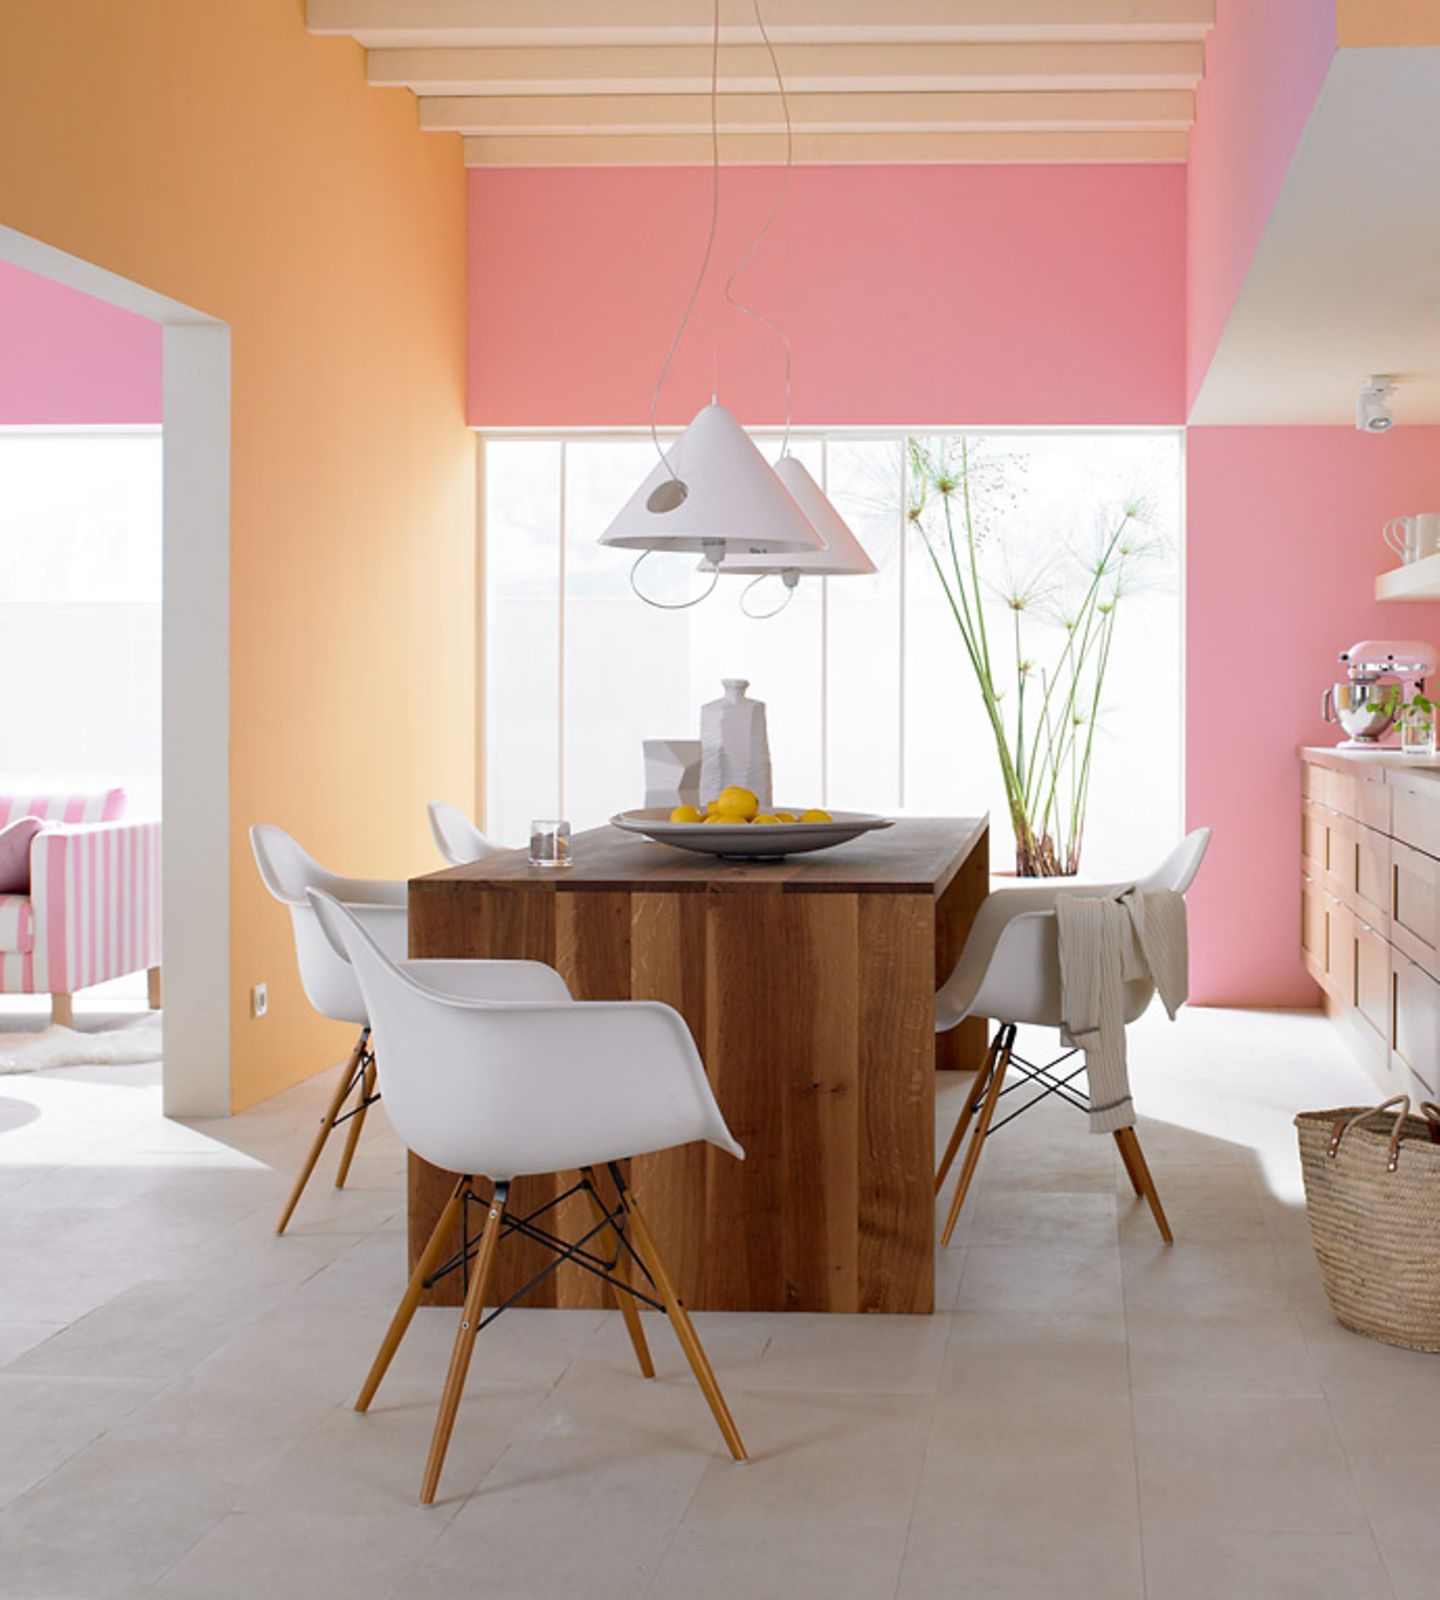 Дизайн покраски кухни. Персиковый цвет в интерьере кухни. Розовая кухня в интерьере. Кухня в пастельных тонах. Окрашивание стен на кухне.